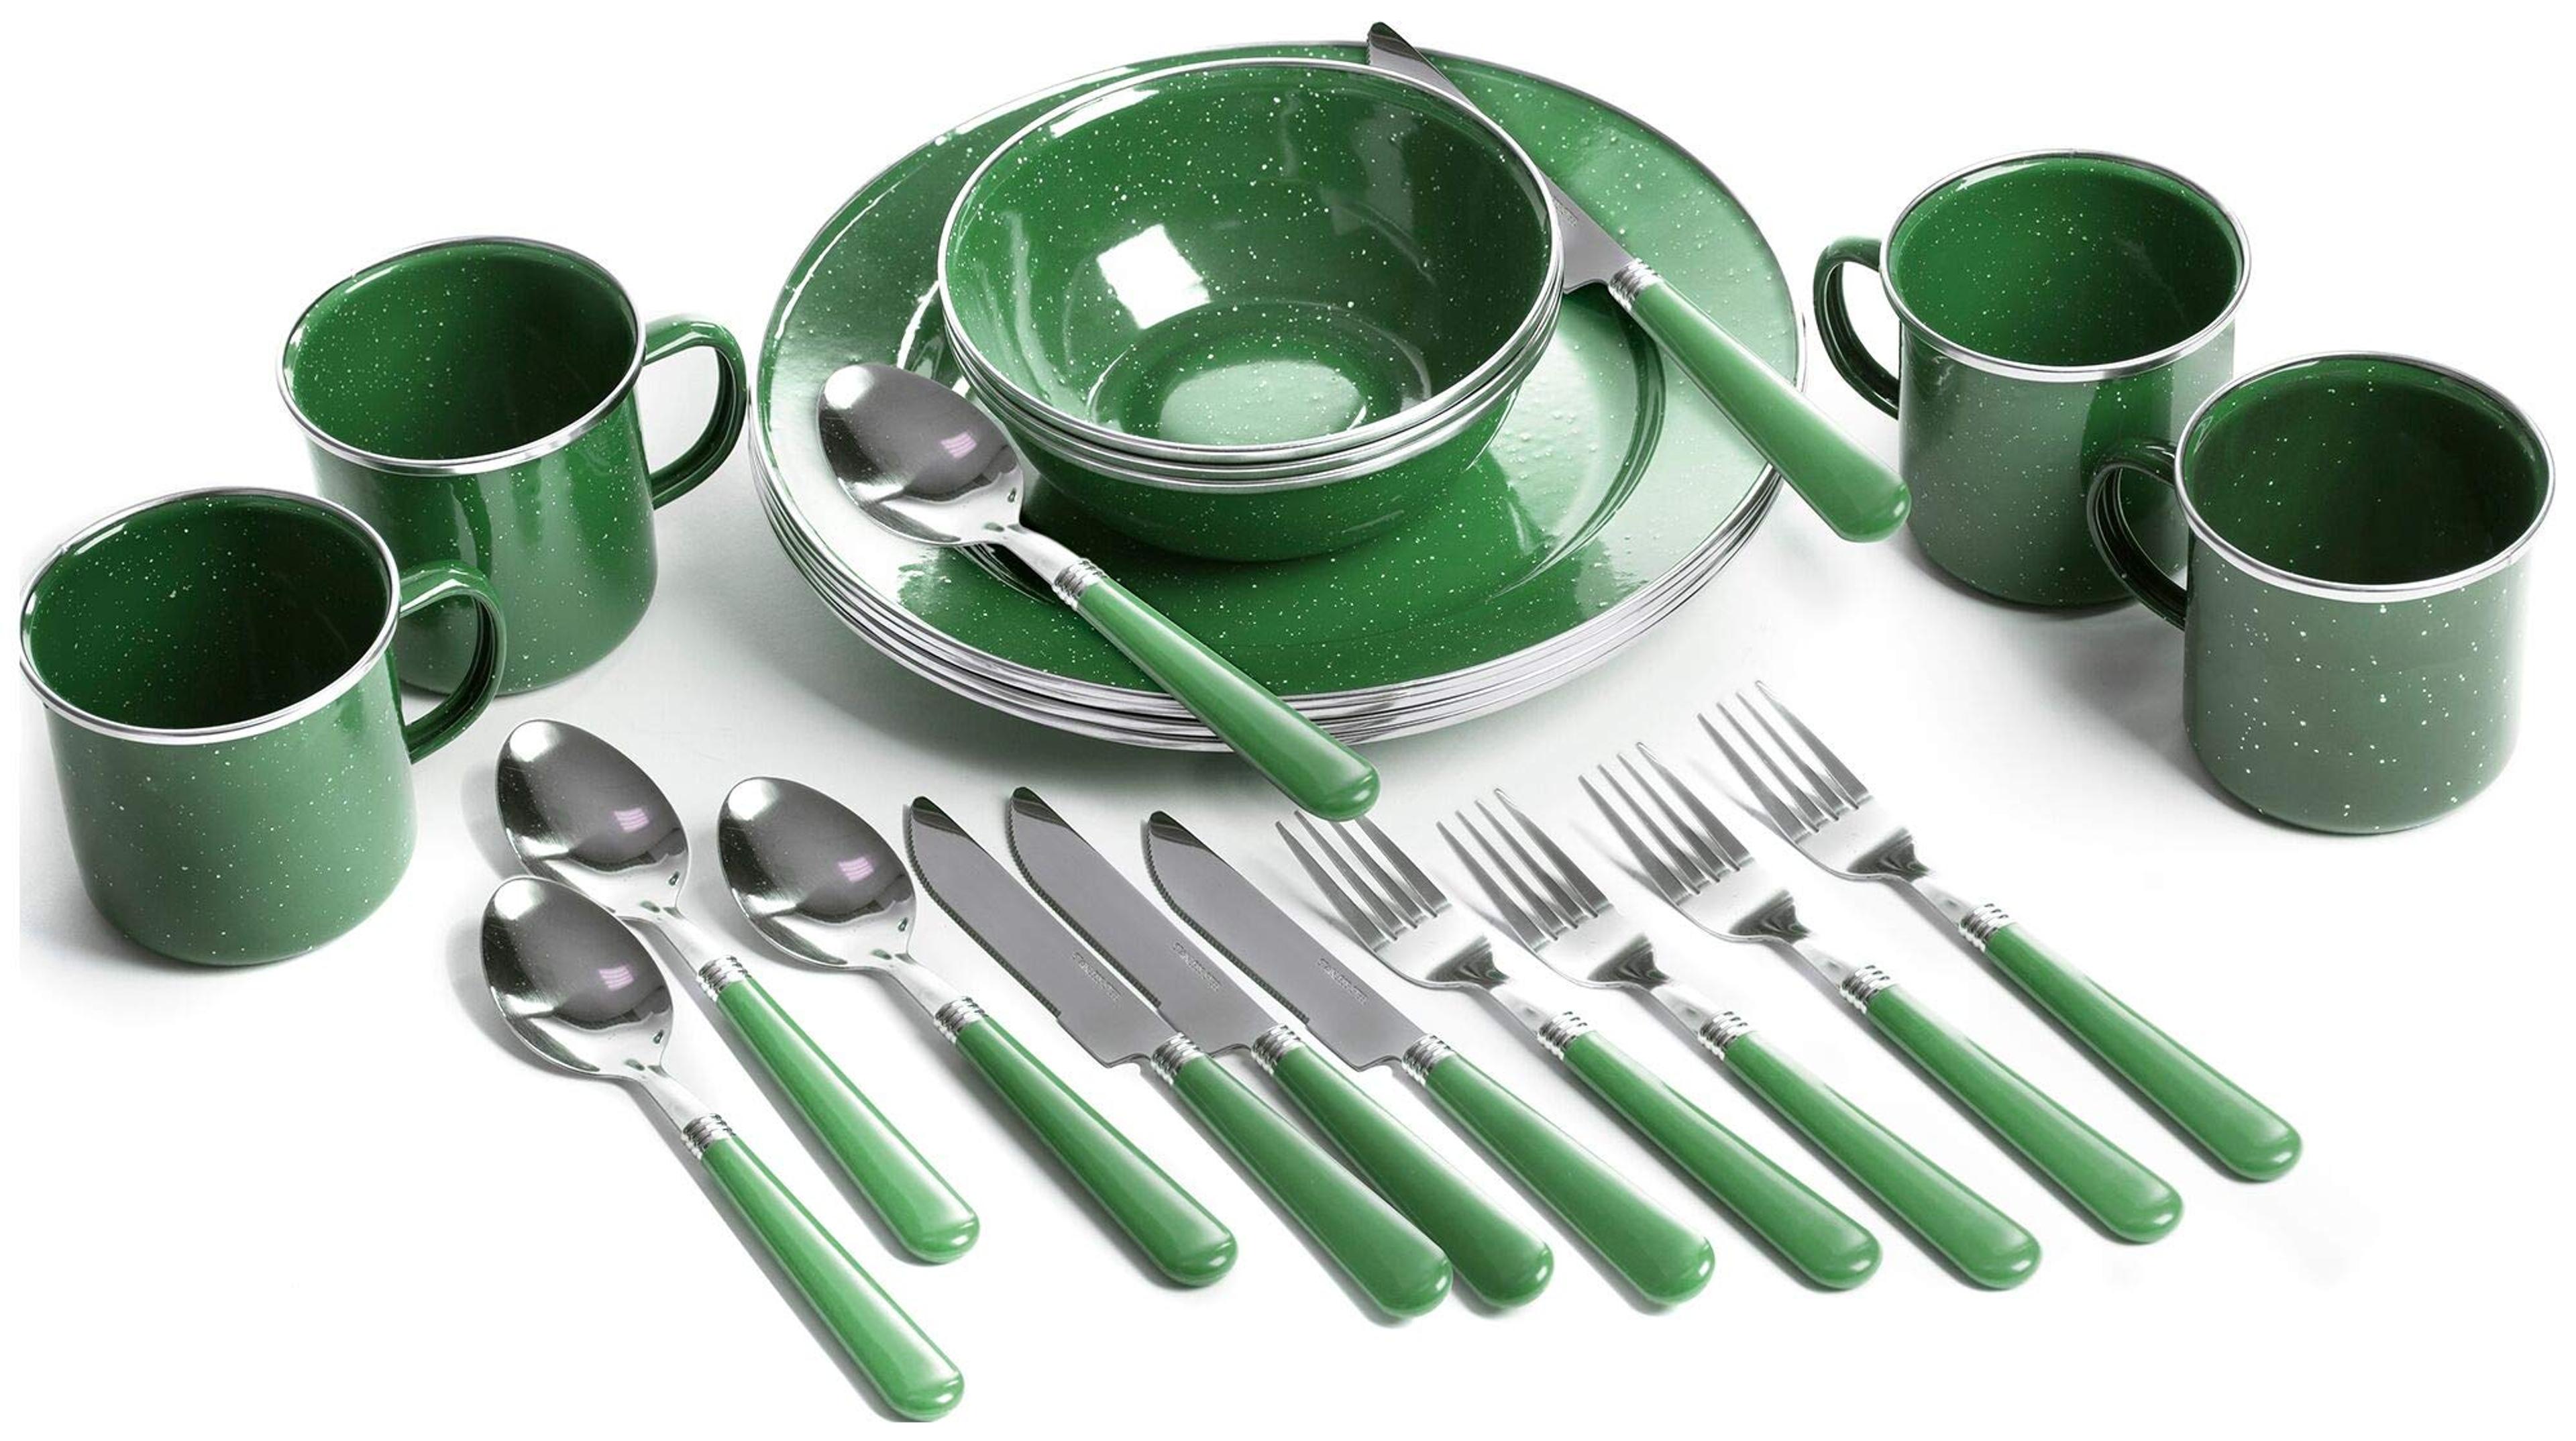 STANSPORT - Deluxe 24-Piece Enamel Tableware Set: Plates, Bowls, Mugs & Utensils (Green)